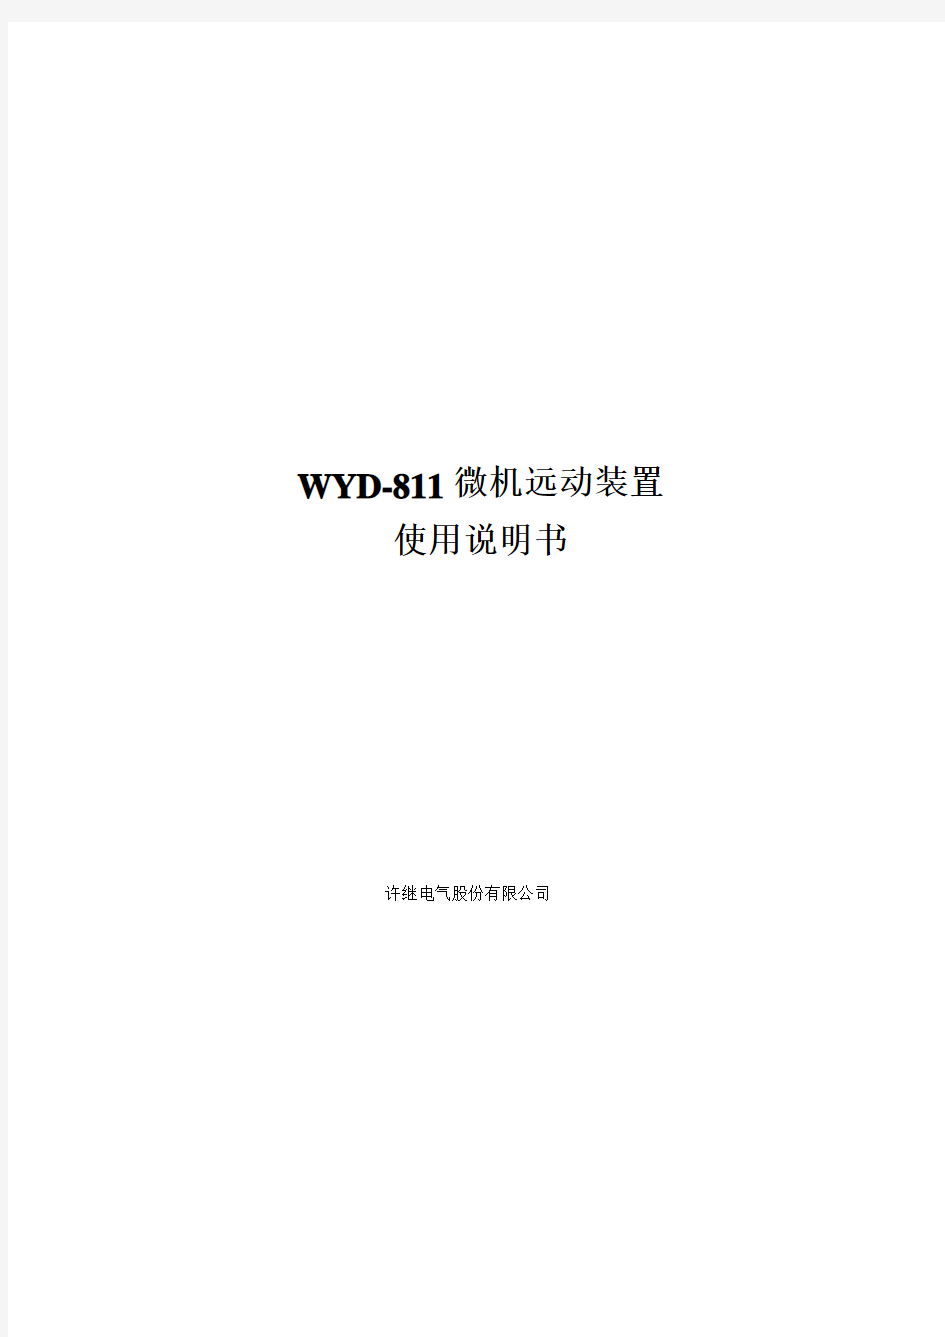 WYD-811微机远动装置使用说明书V3.10